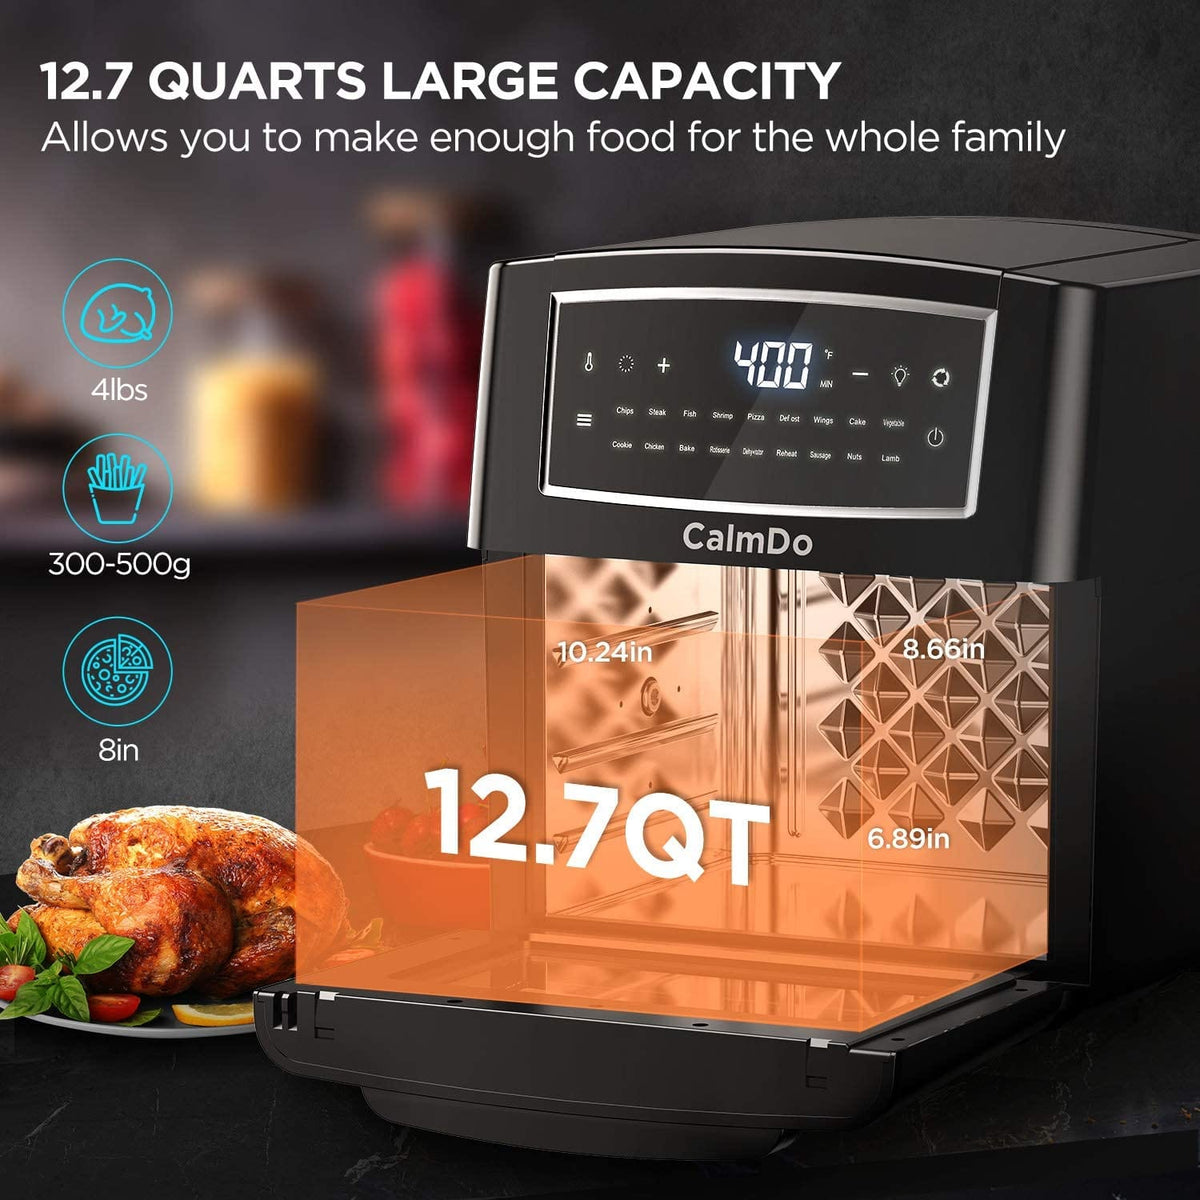 calmdo home appliance Calmdo 12.7 Quart Air Fryer Toaster Oven